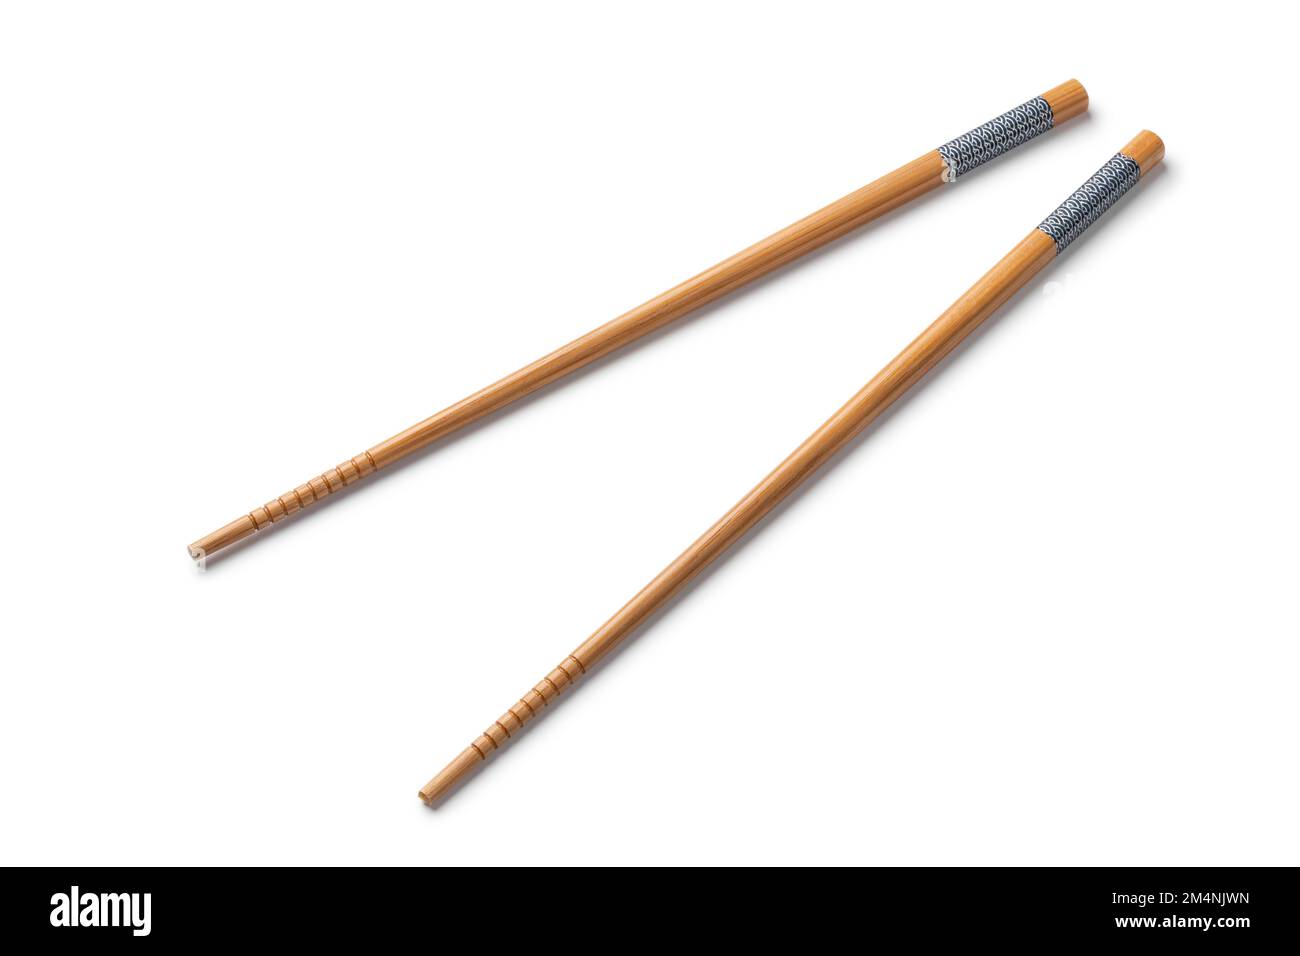 Pair of Japanese chopsticks isolated  on white background Stock Photo